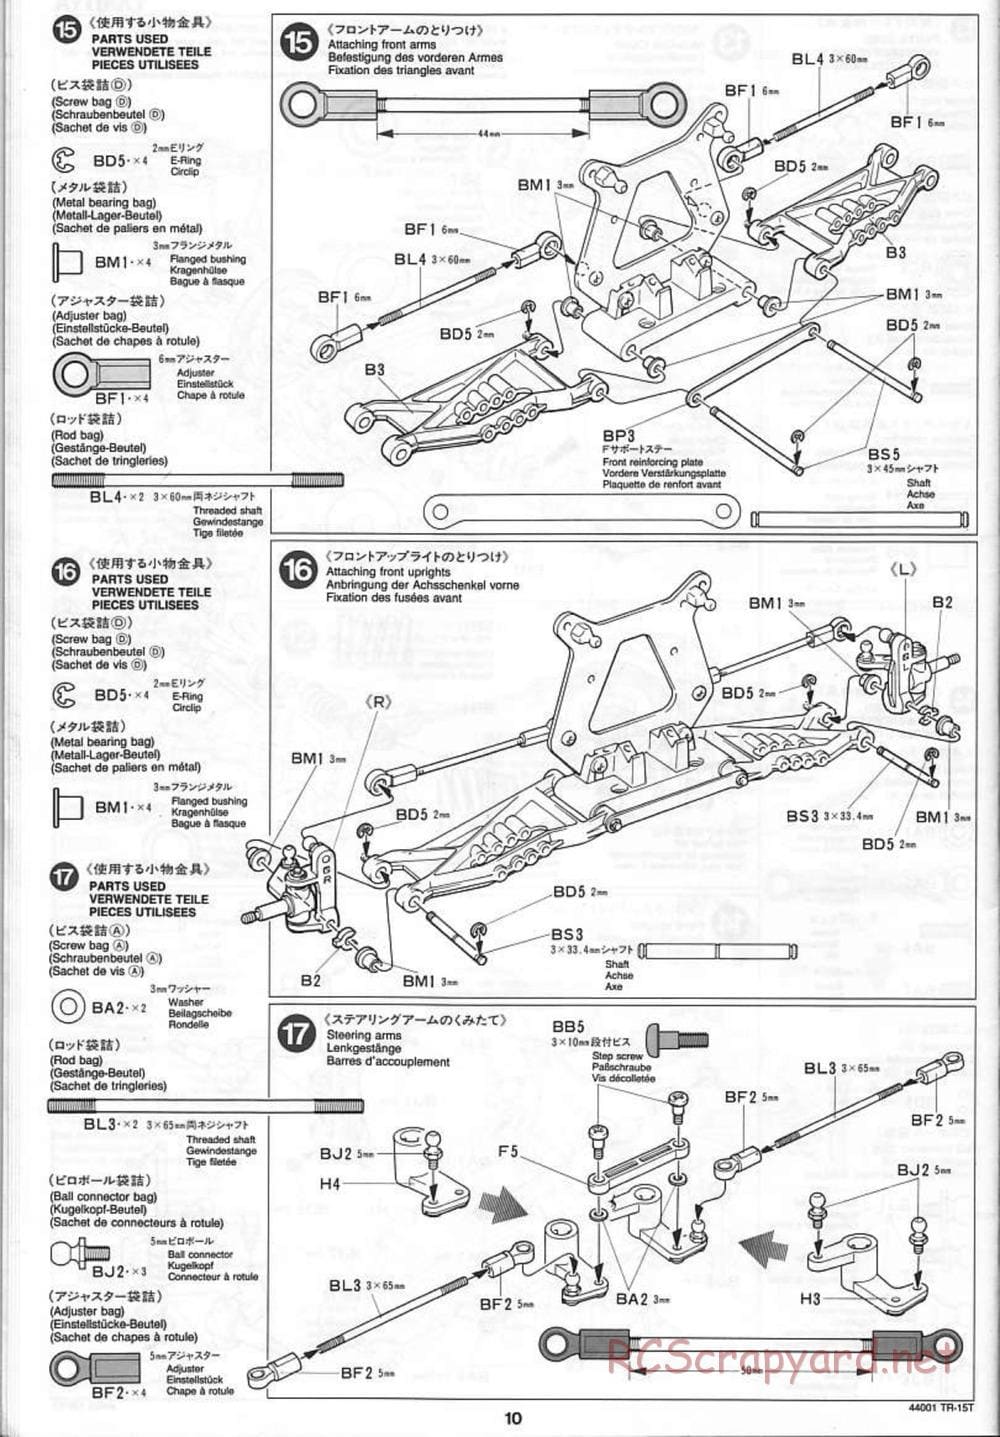 Tamiya - Stadium Racing Truck TR-15T Chassis - Manual - Page 10